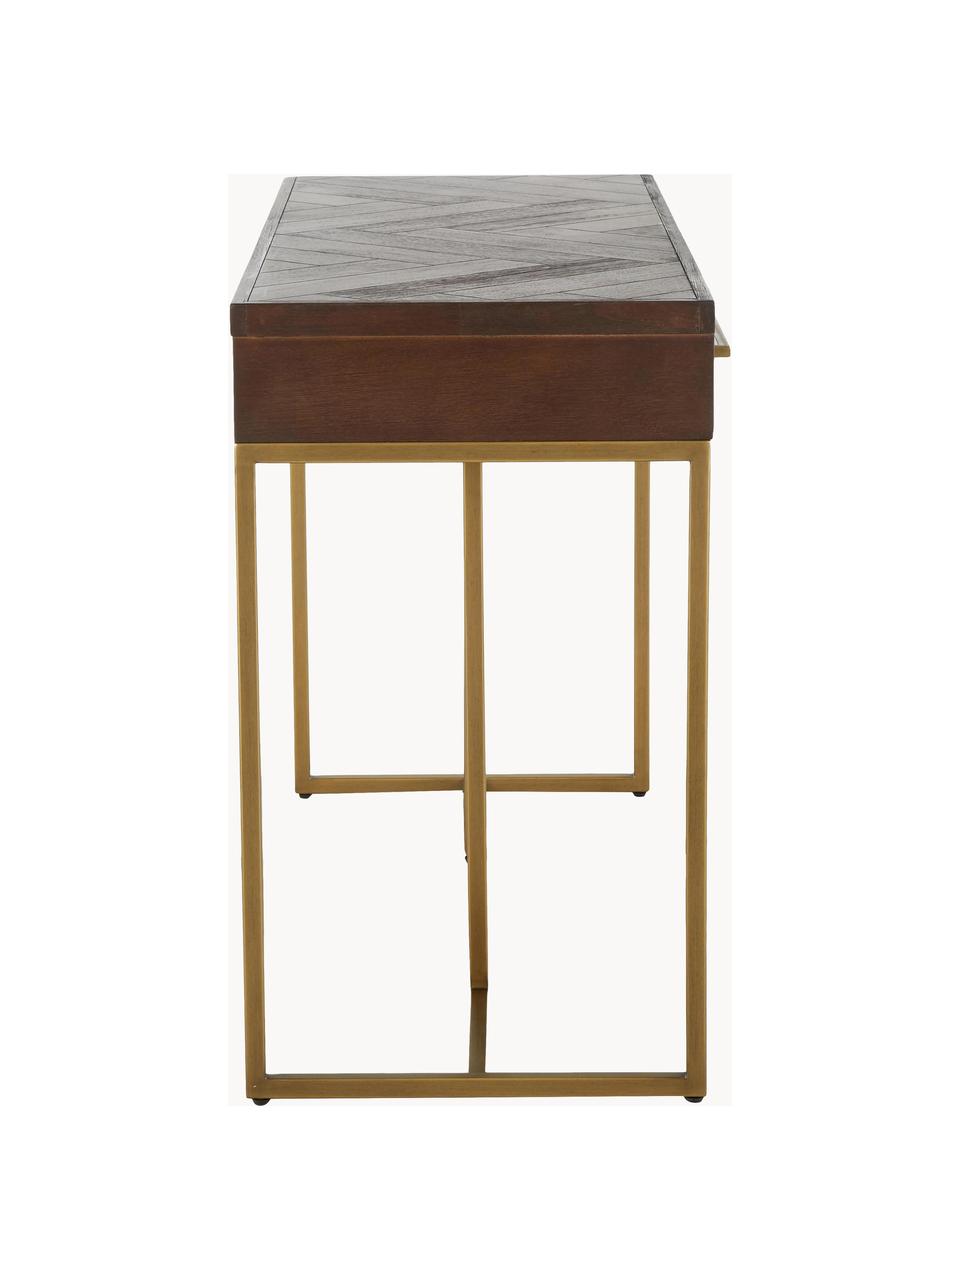 Konzolový stolek s dýhou z  akáciového dřeva Class, Dřevo, Š 120 cm, V 80 cm